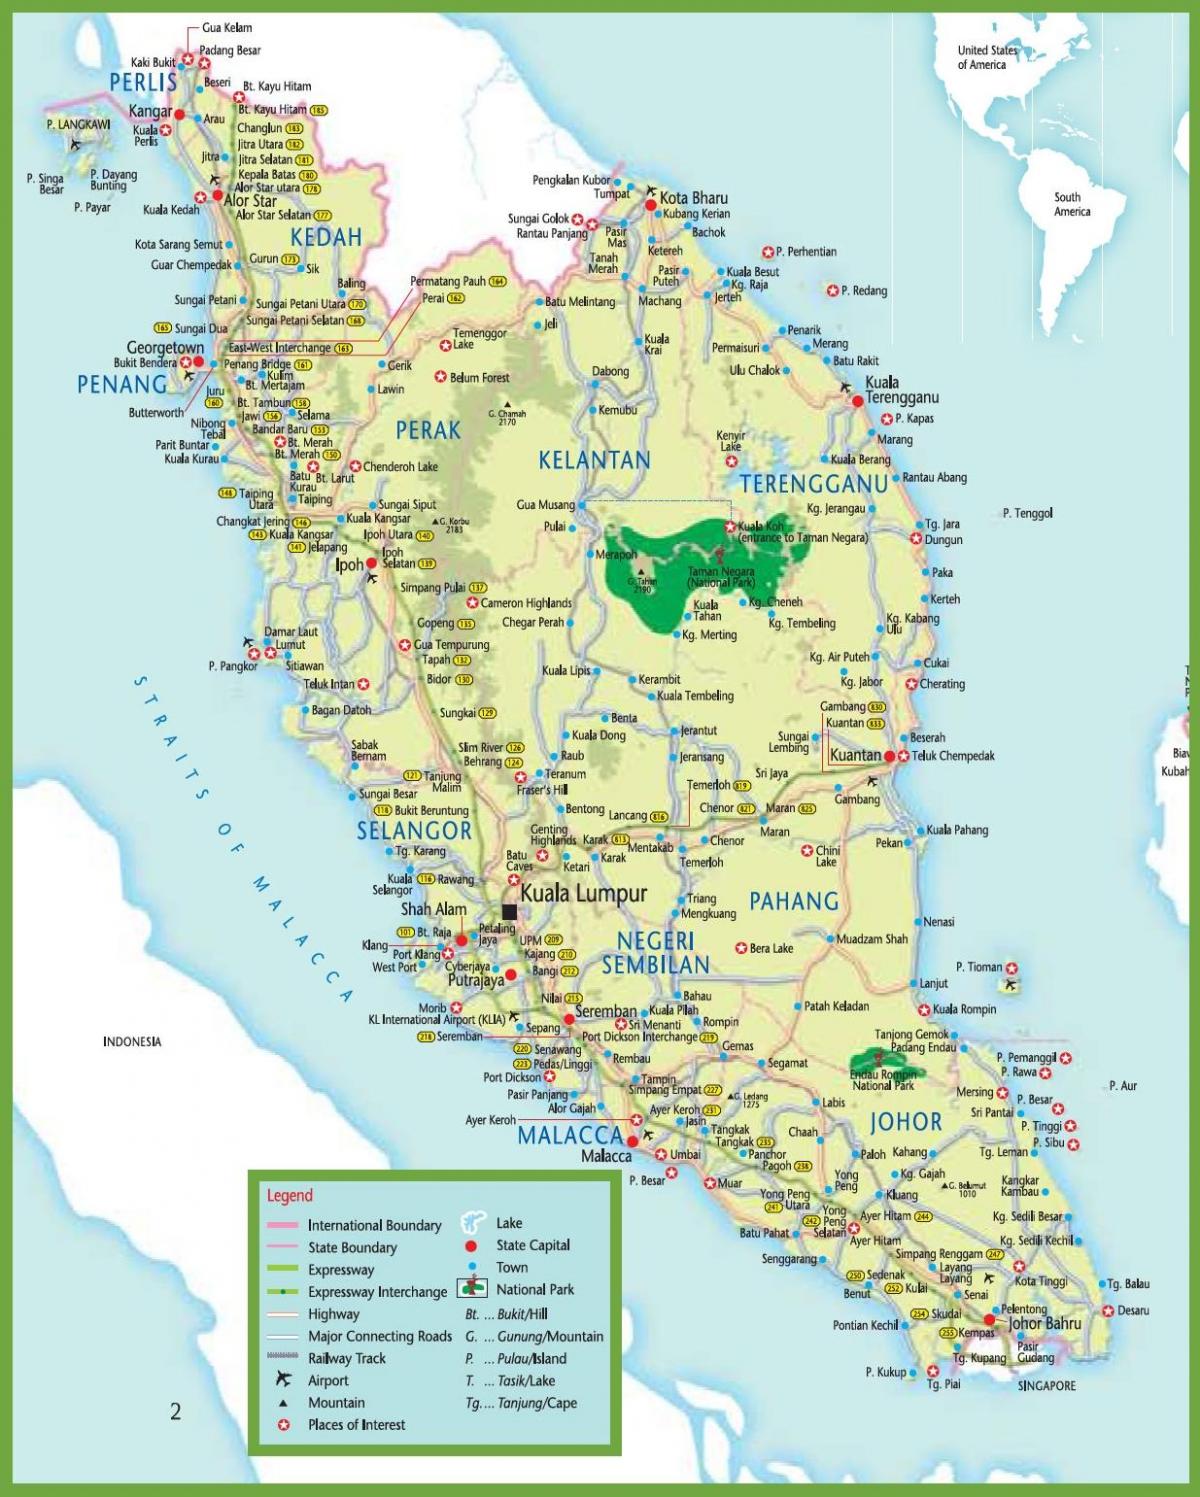 mrt mapa v malajsii